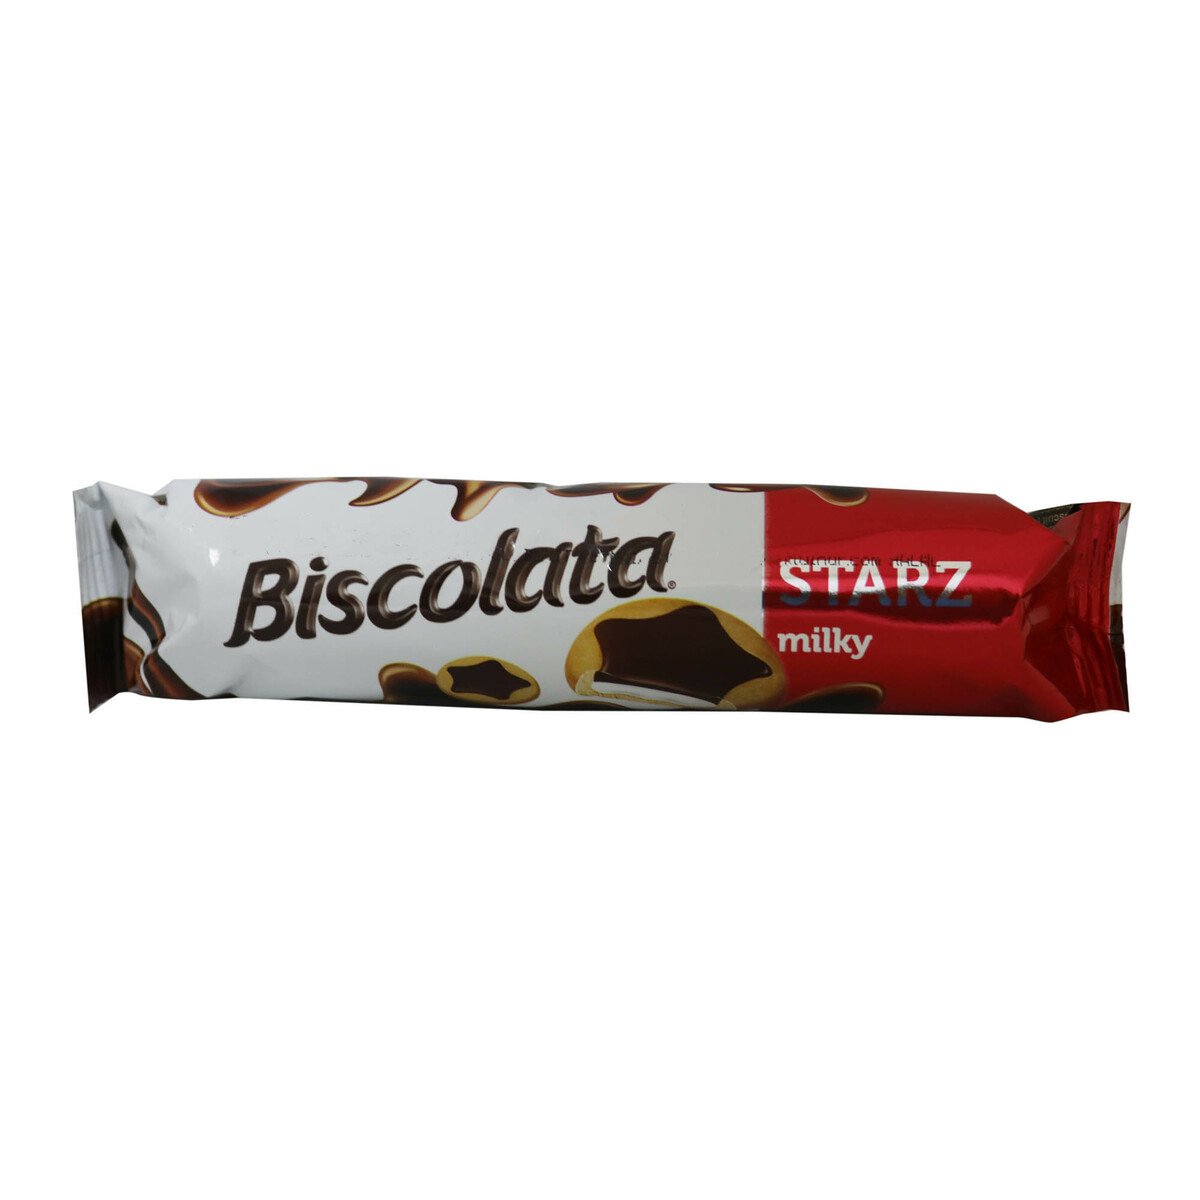 Biscolata Starz Milky Biscuit 88g